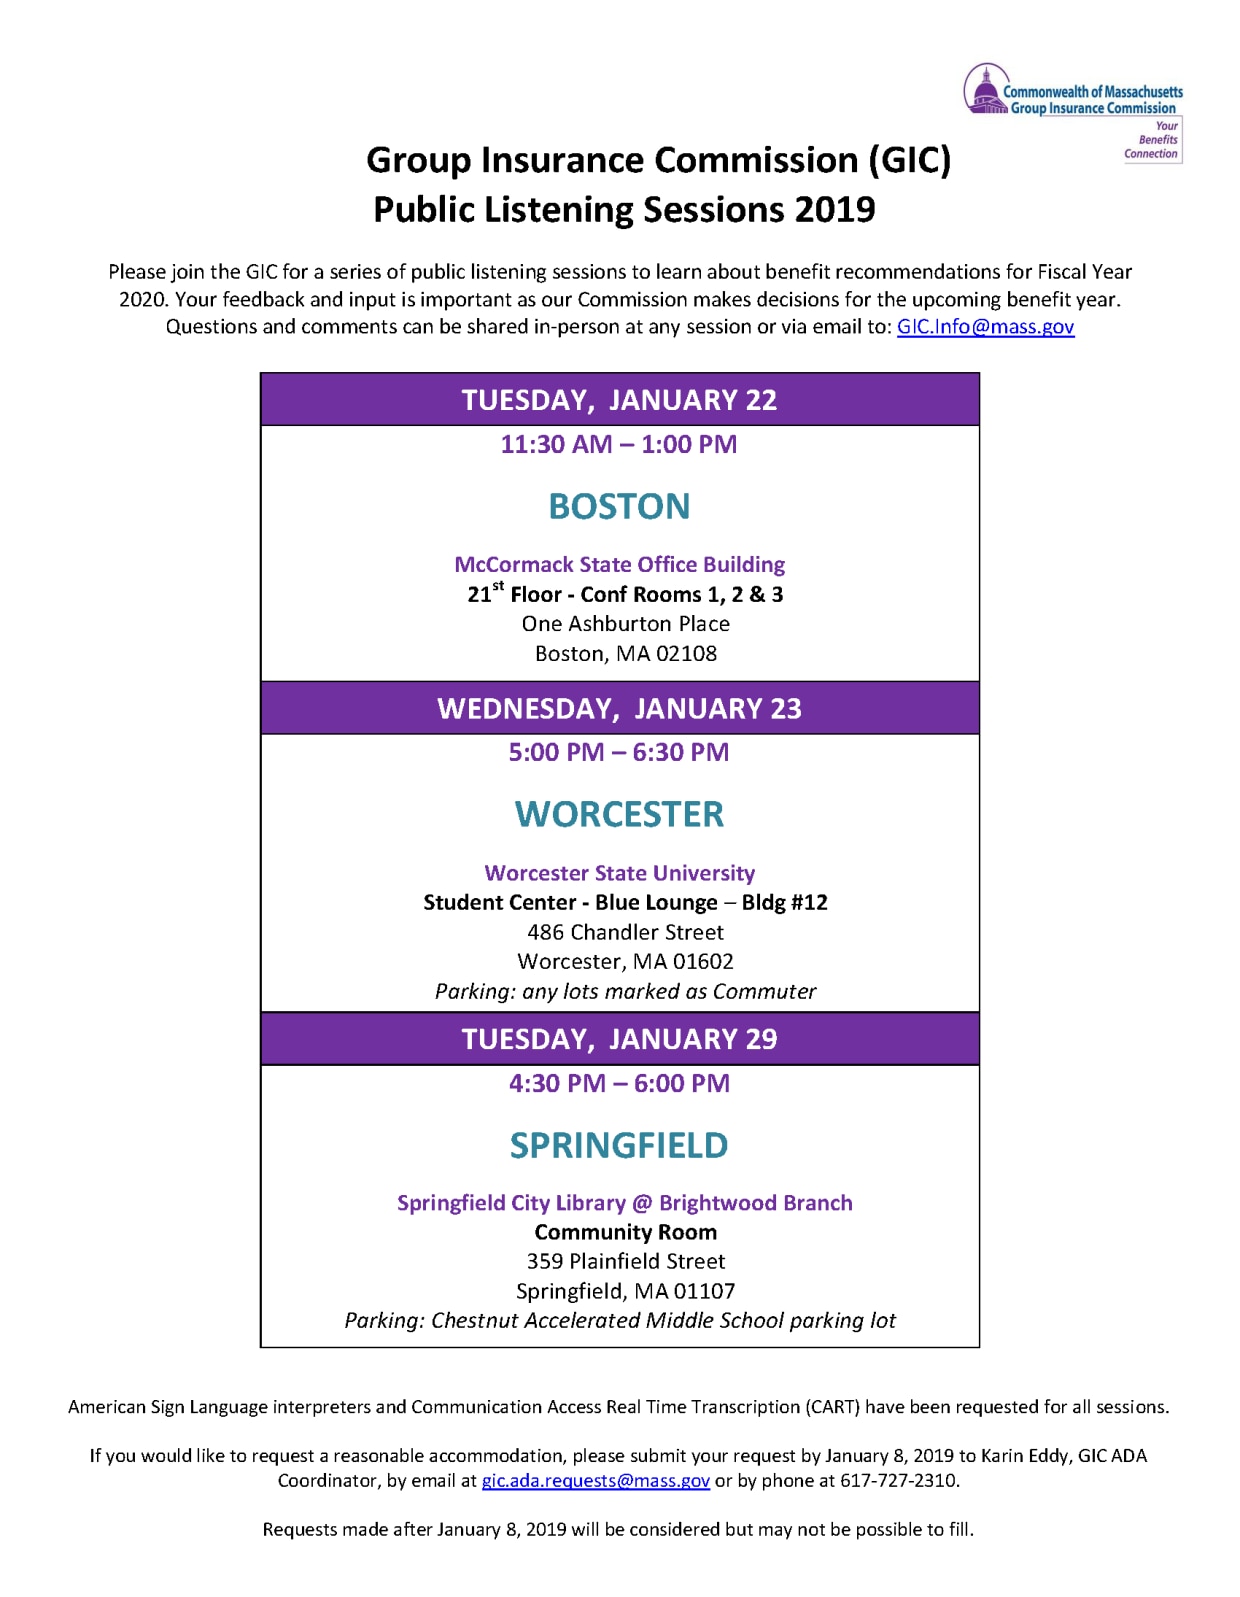 GIC Public Listening Sessions 2019 Flyer